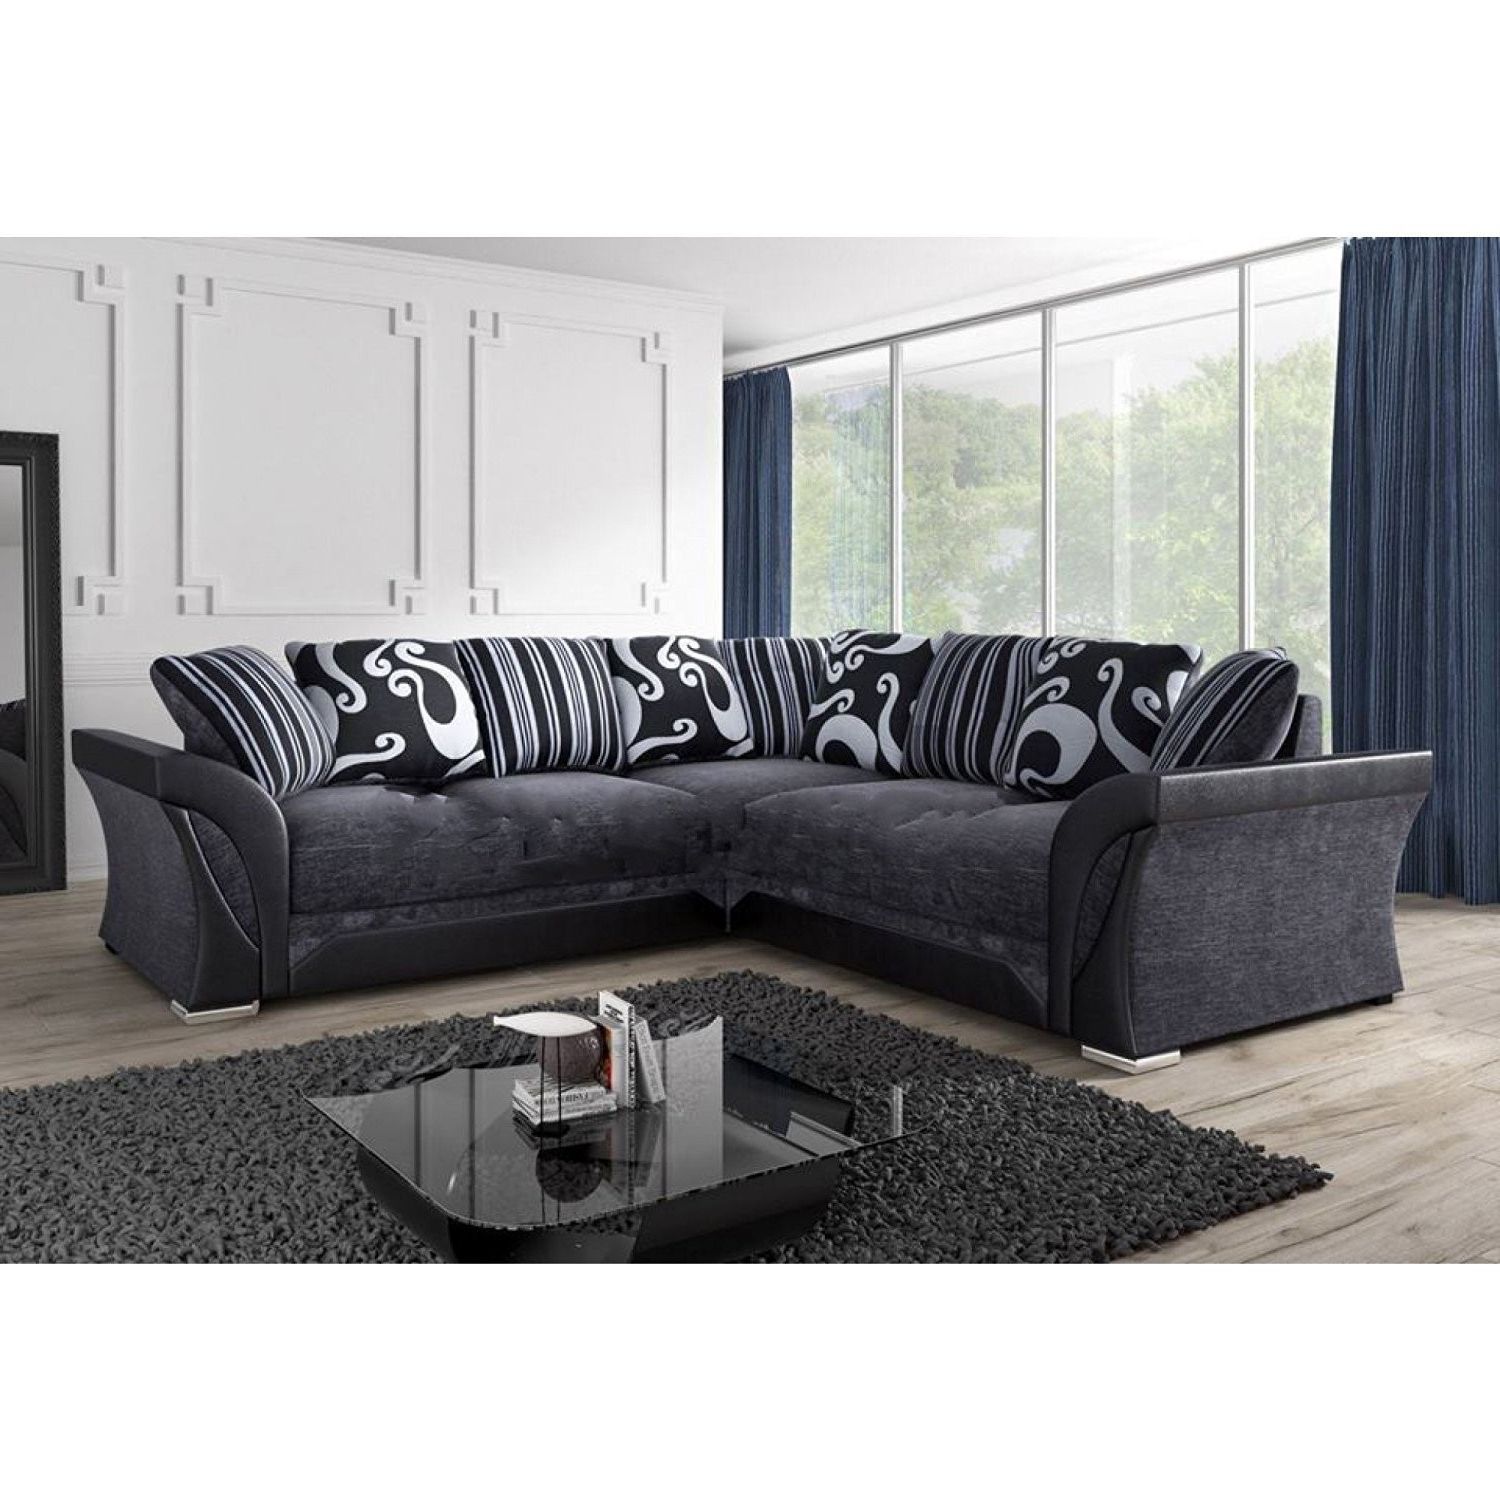 Lovely Corner Sofa Black And Grey – Mediasupload In Latest Fabric Corner Sofas (View 10 of 15)